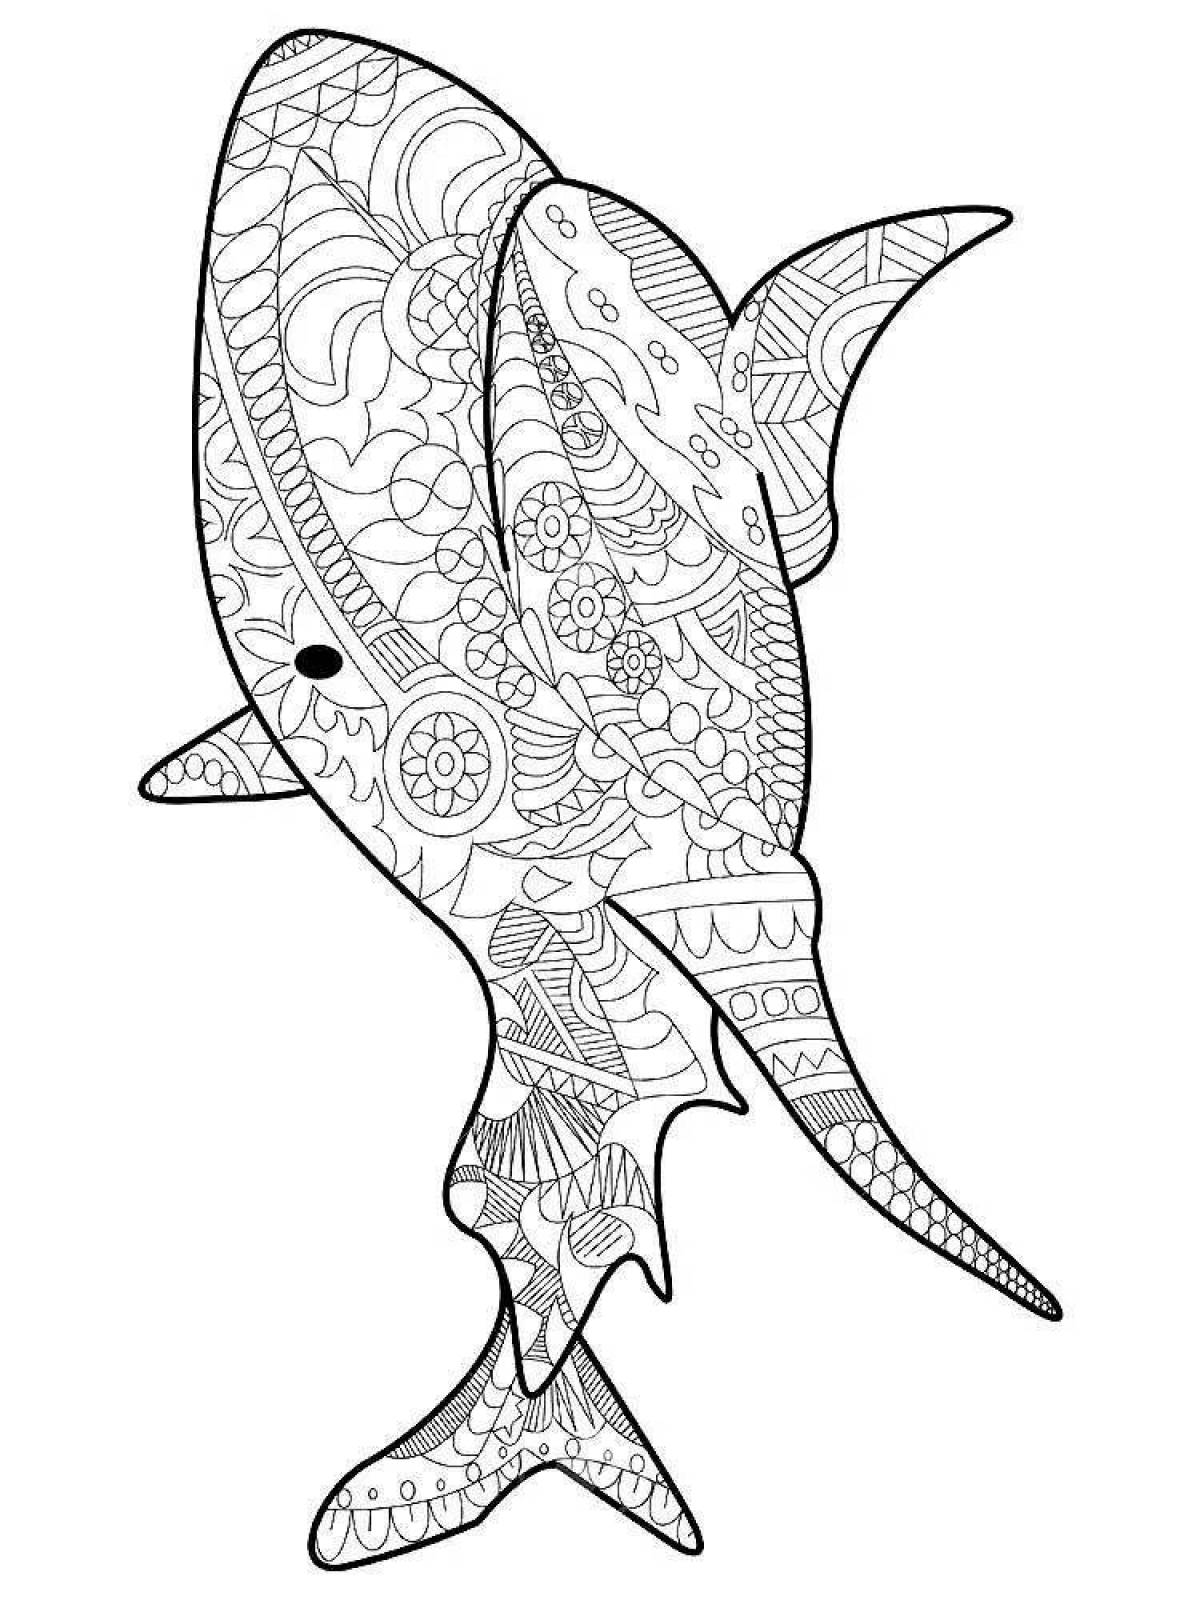 Fabulous shark coloring book from ikea